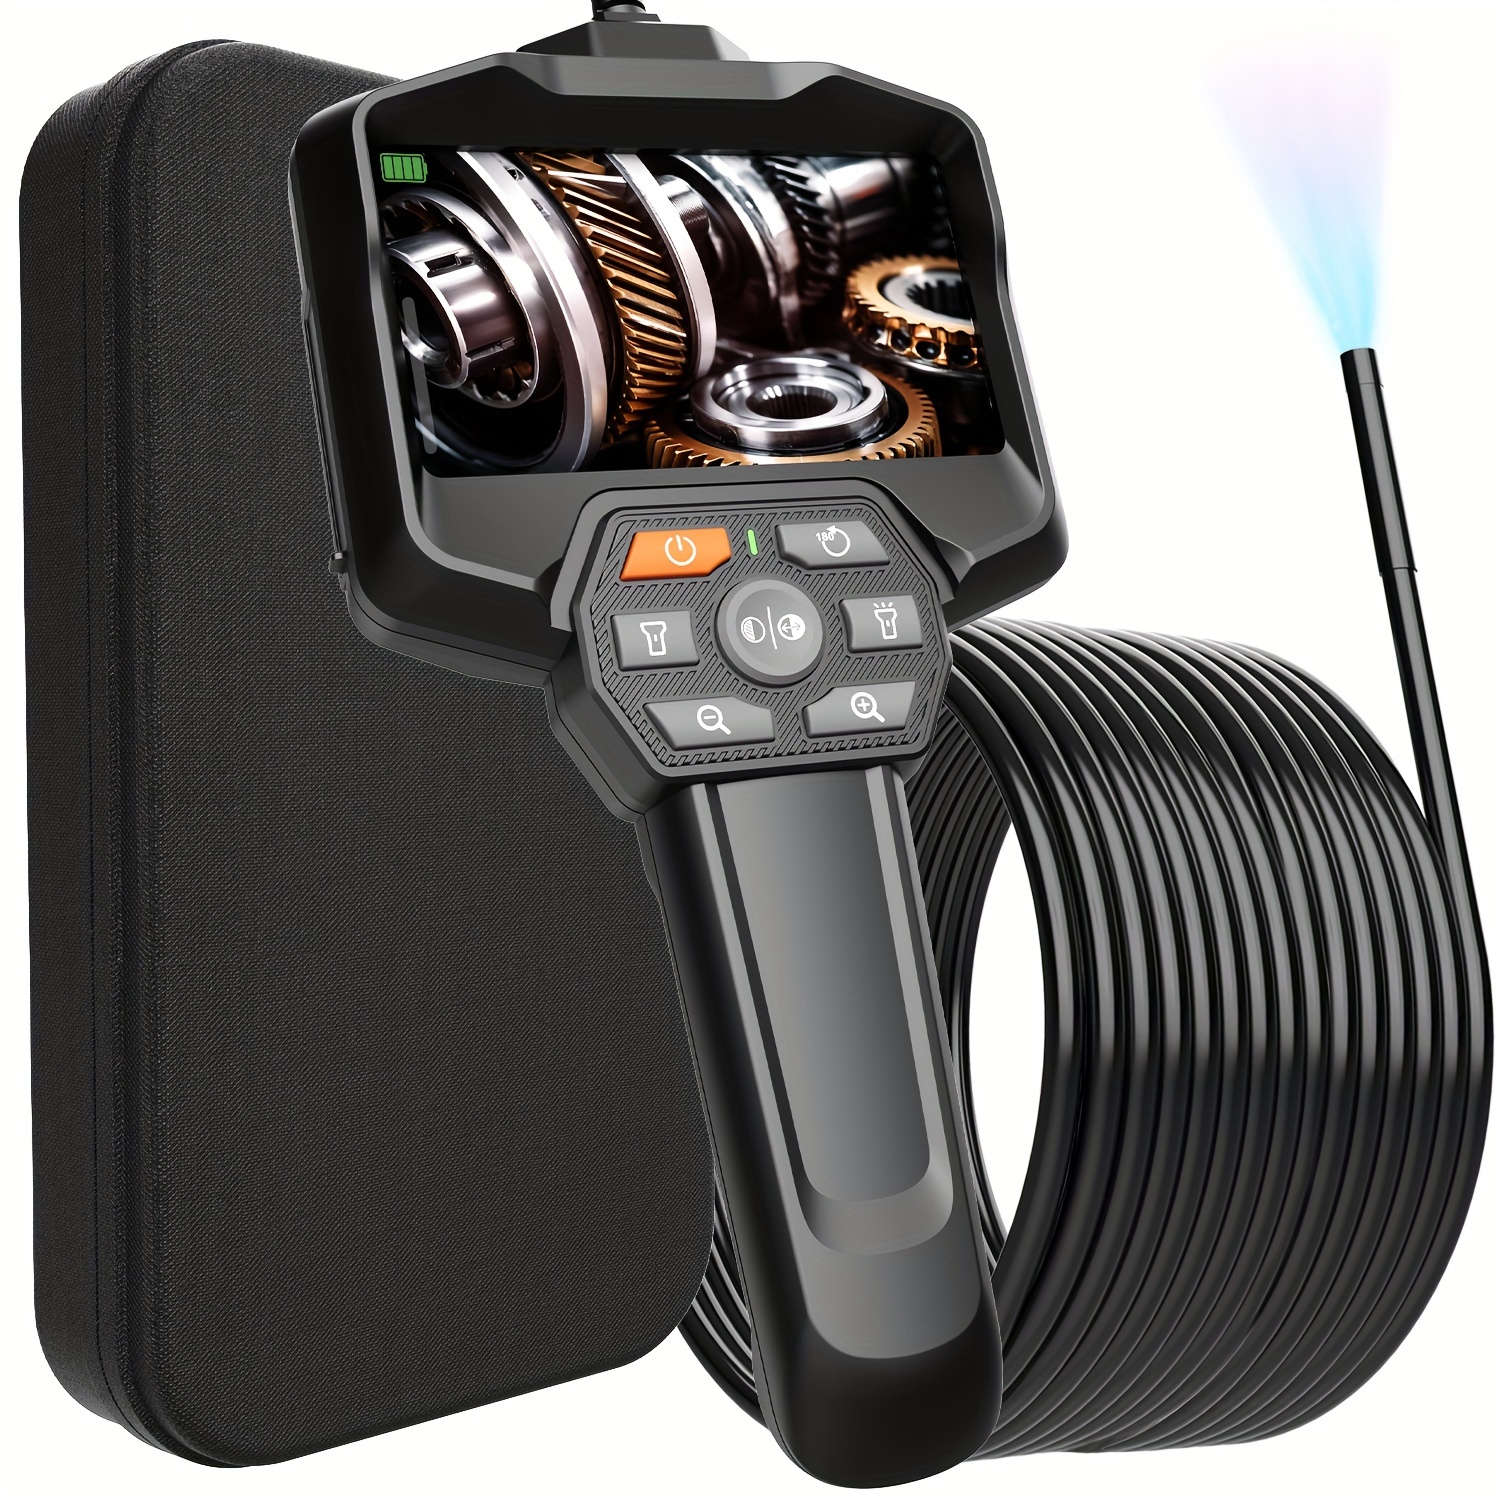 Endoscopio Cámara de Inspección - 3 en 1 USB Cámara Endoscópica de Cable  Semirrígido, Endoscopio Para Movil